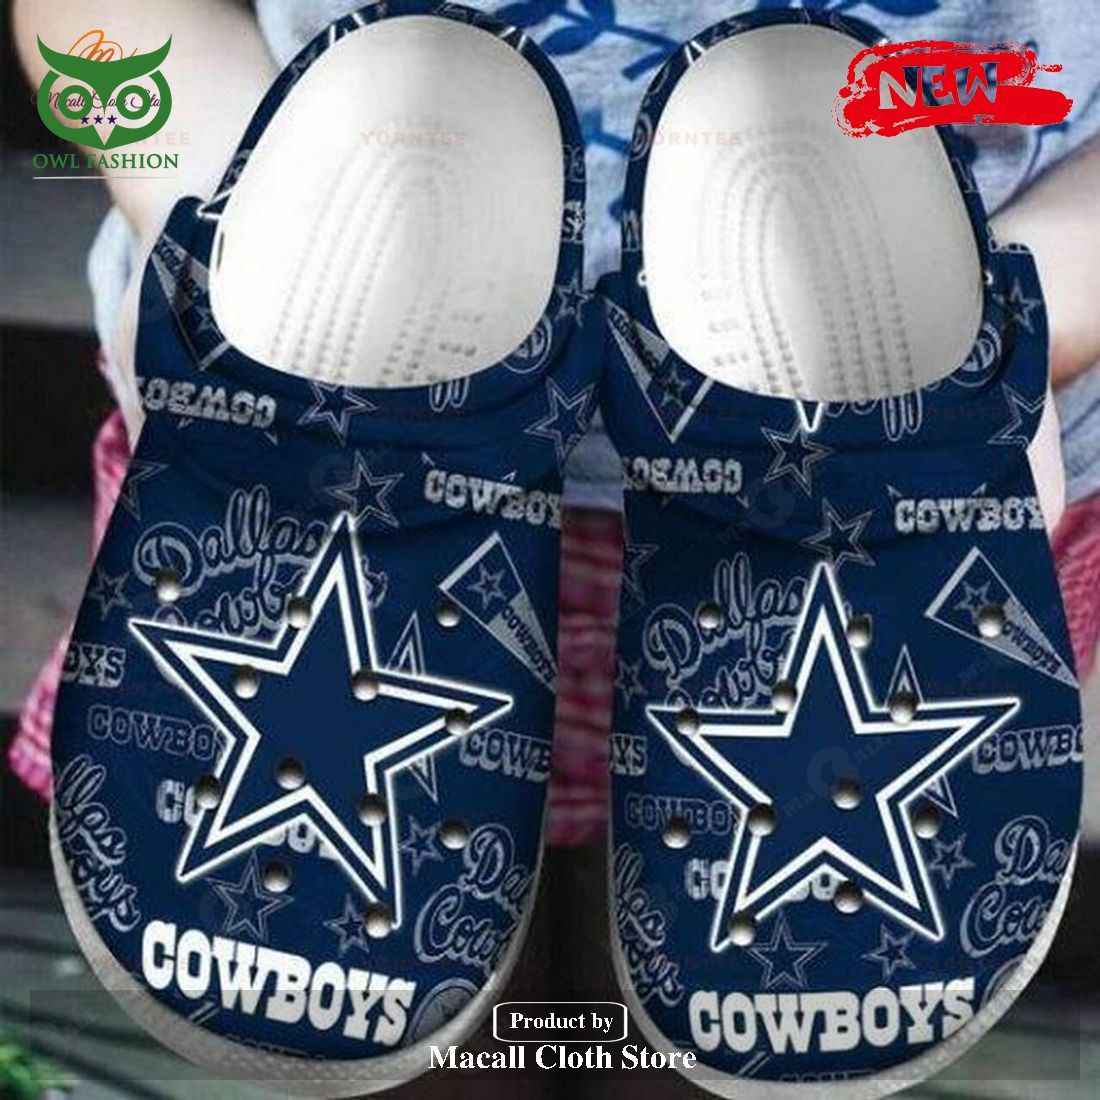 Dallas Cowboys Unisex Crocs Clog Shoes Hey! You look amazing dear